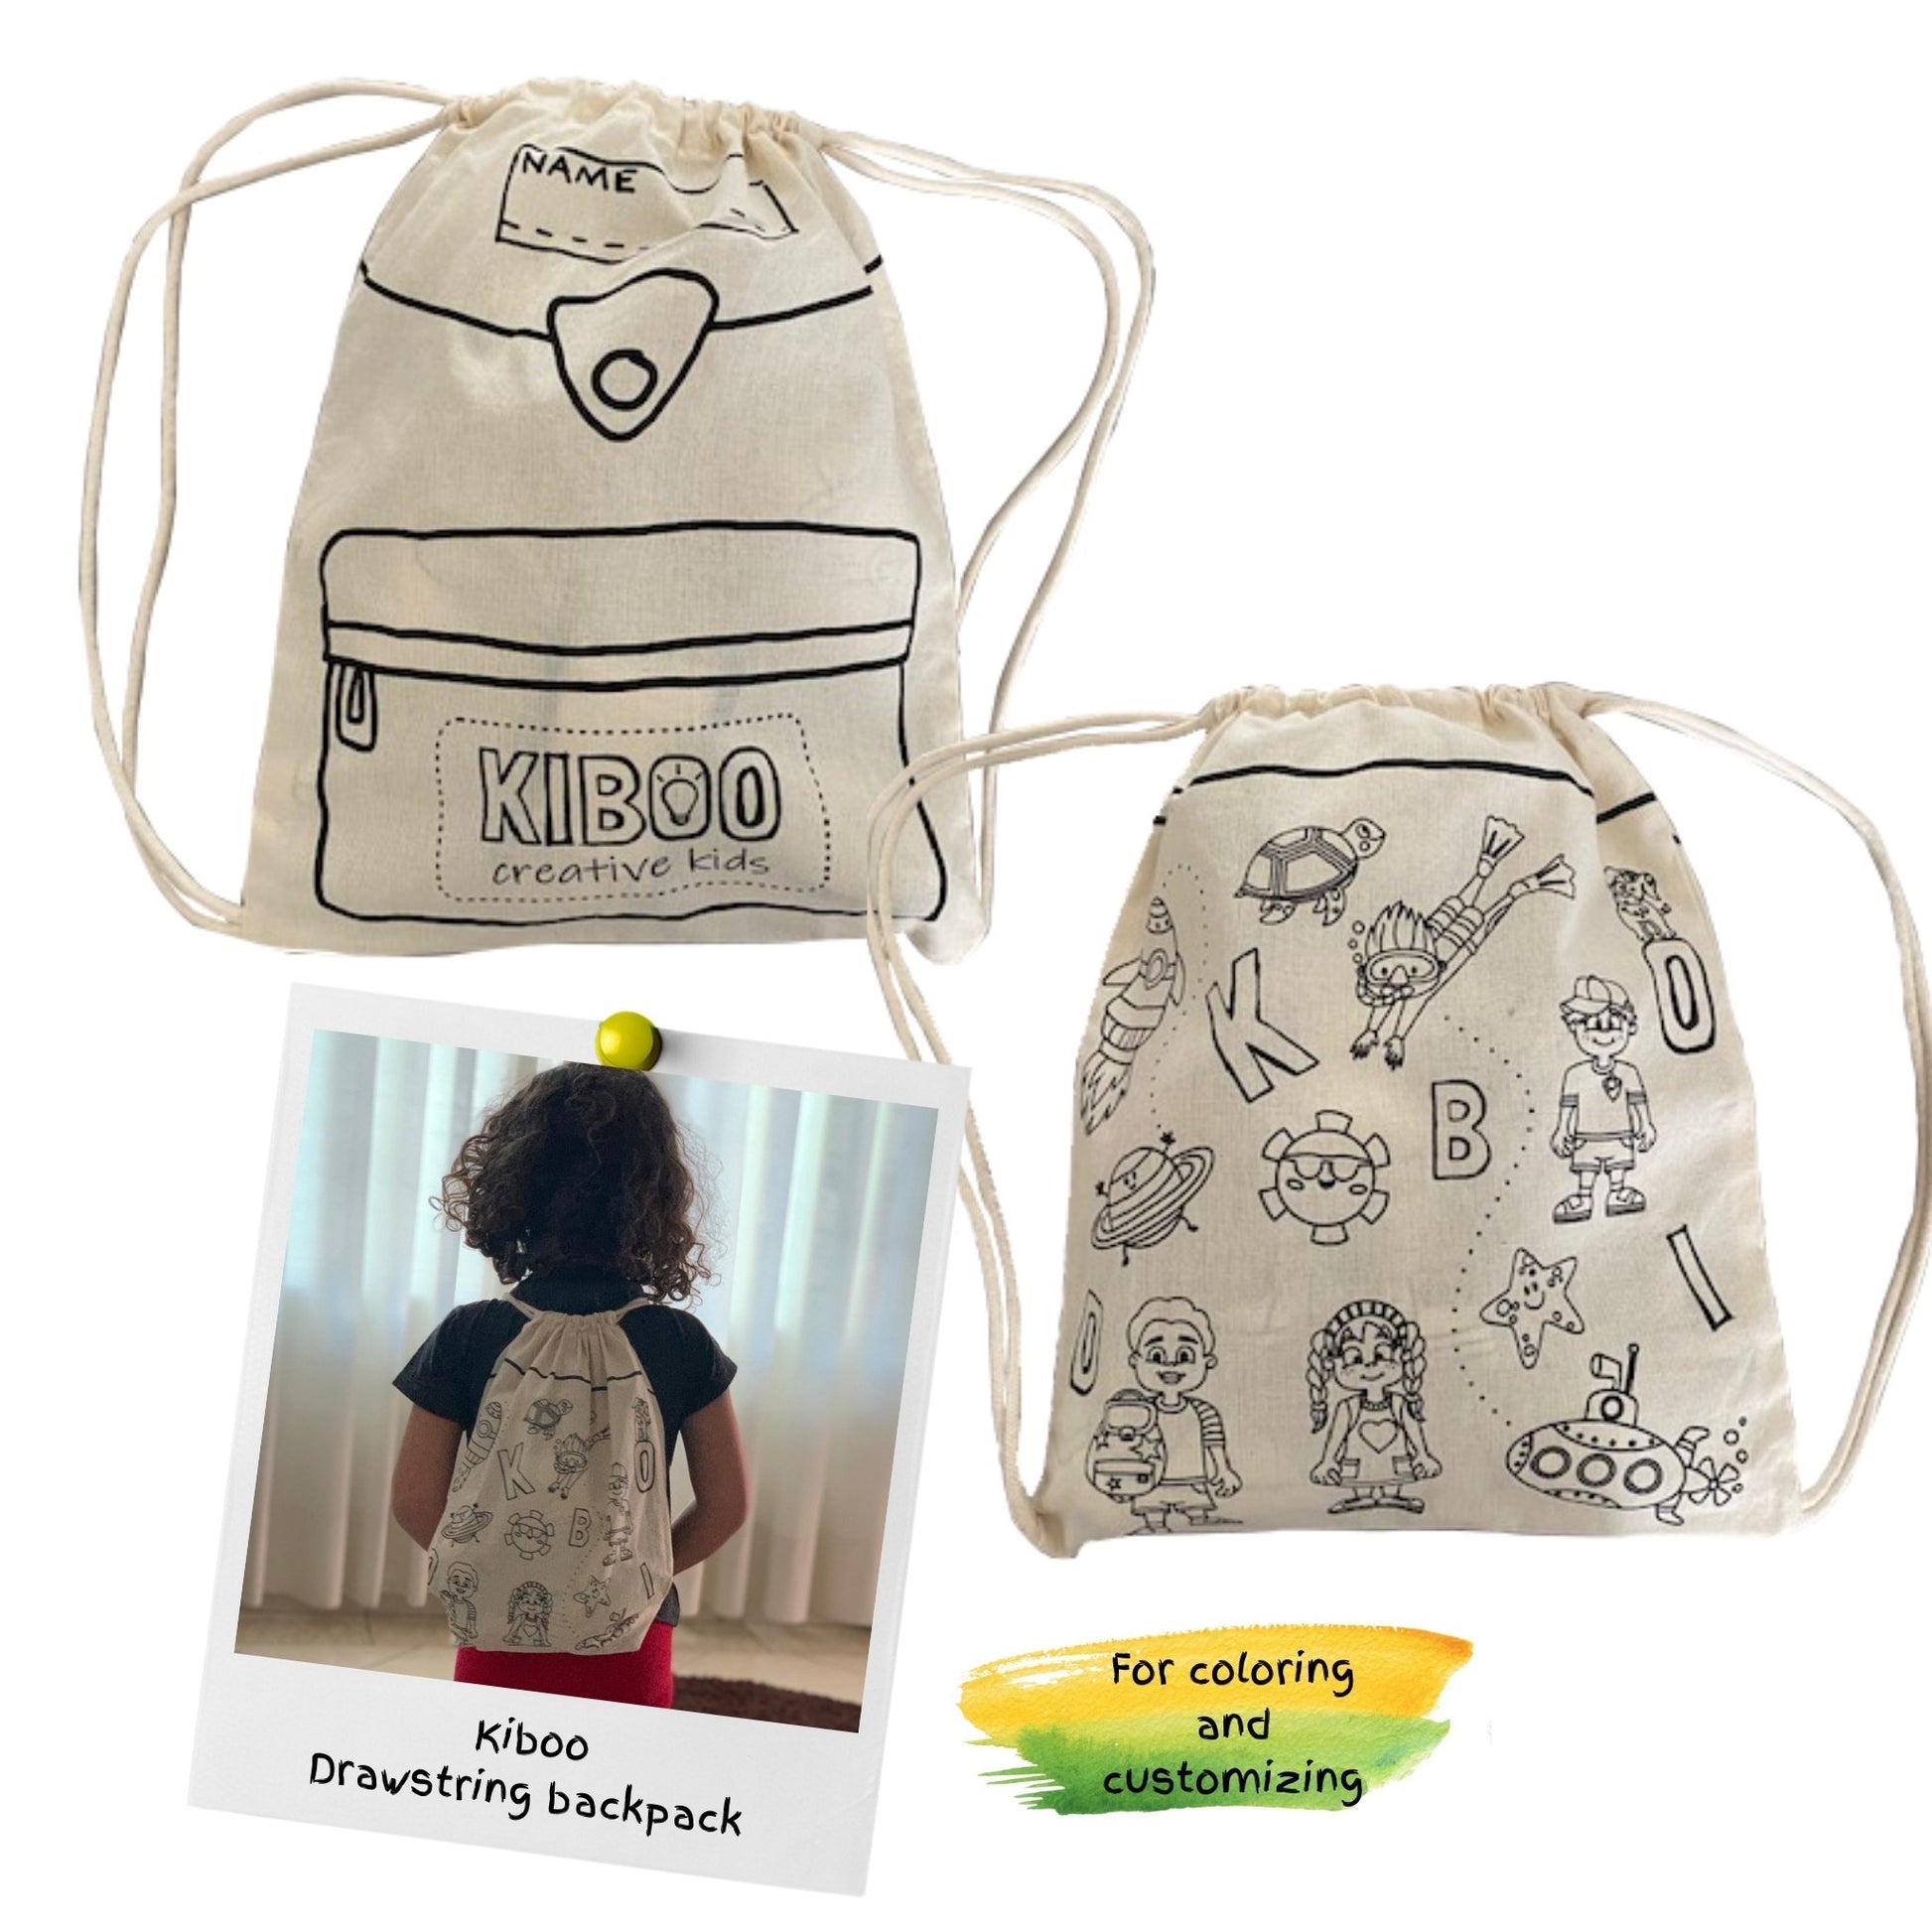 Art Kit for Kids - Soccer Girl with Pompons - Rag Doll for Coloring - Kiboo Creative